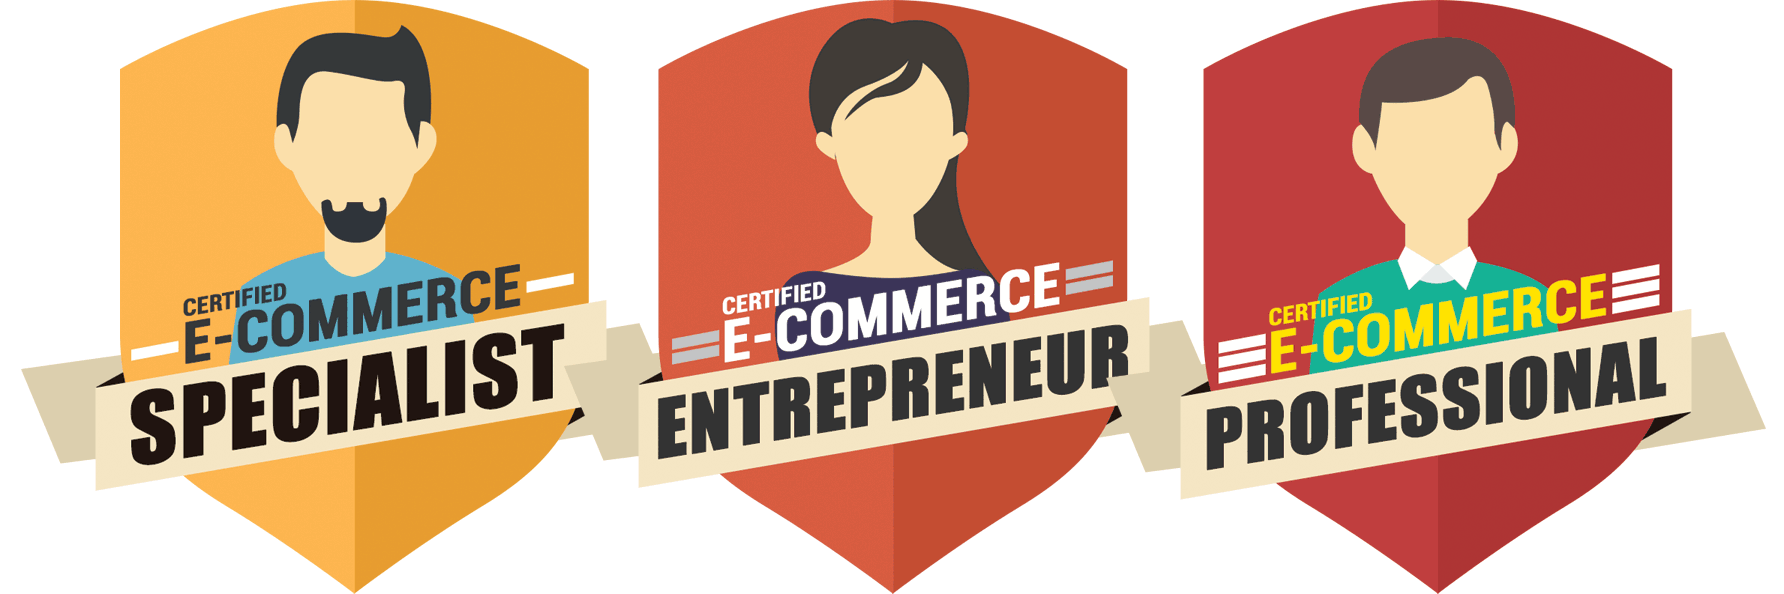 Certified E-Commerce Specialist, Entrepreneur, Professional Program by Janette Toral